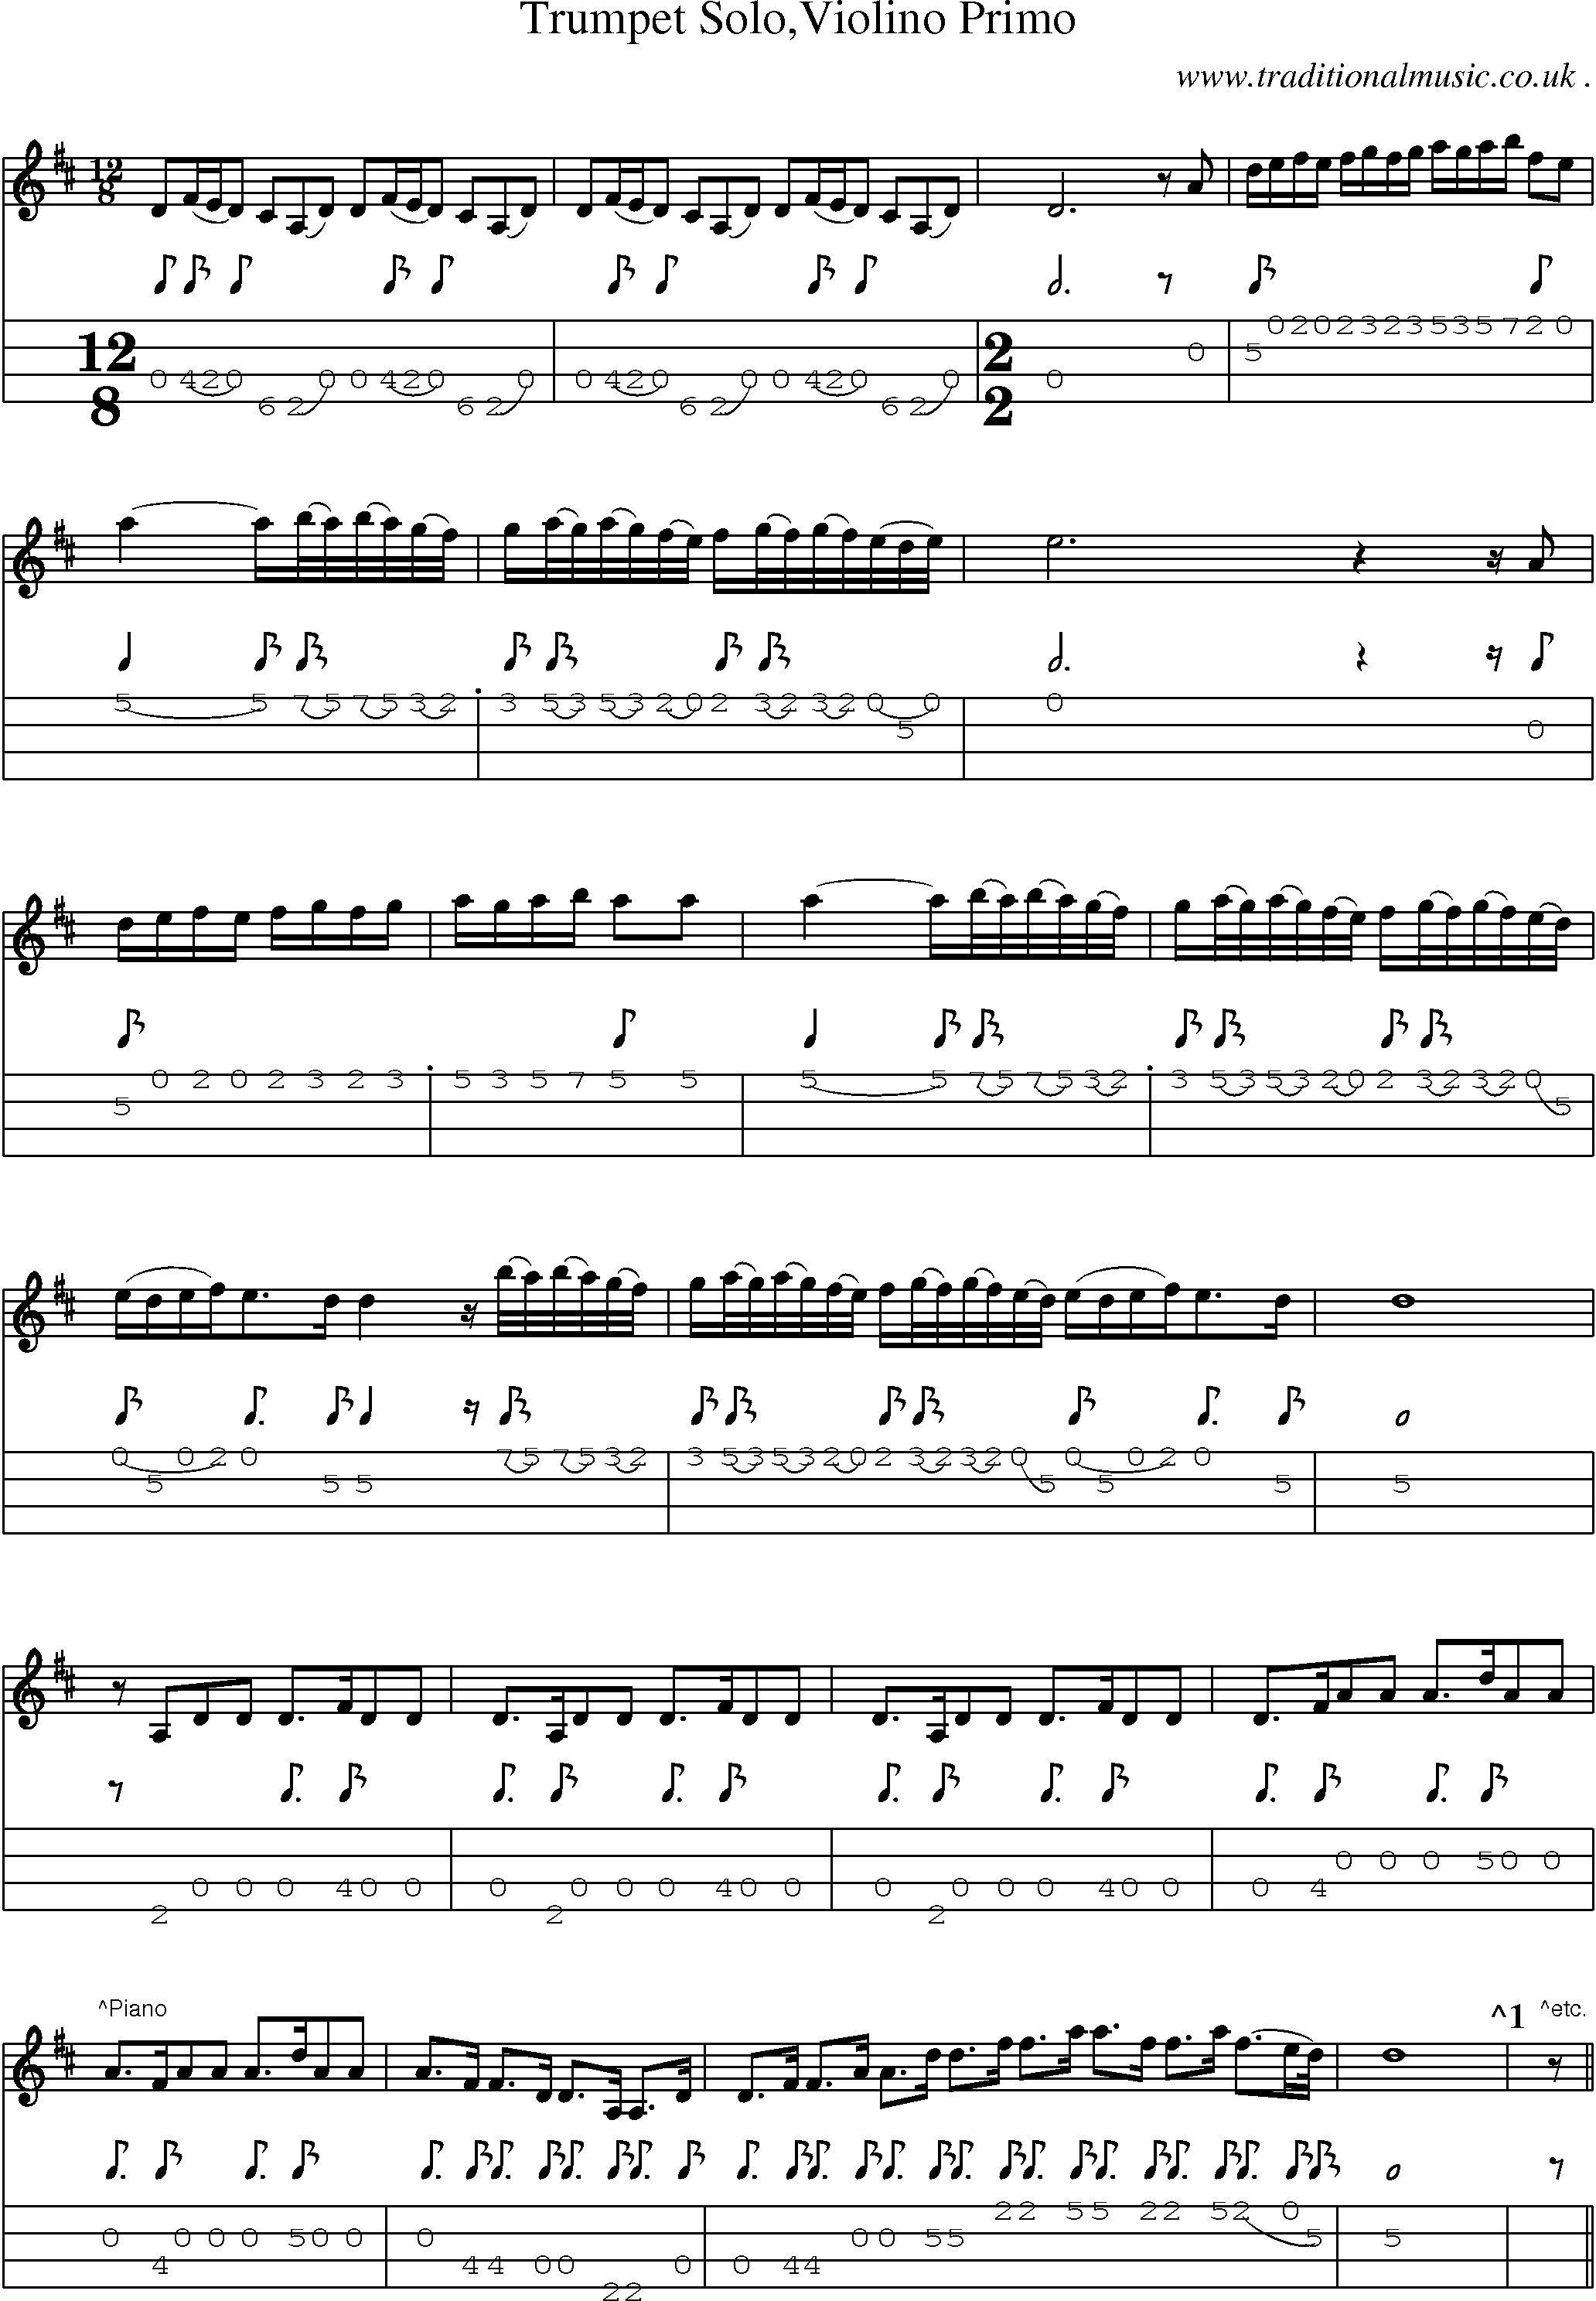 Sheet-Music and Mandolin Tabs for Trumpet Soloviolino Primo